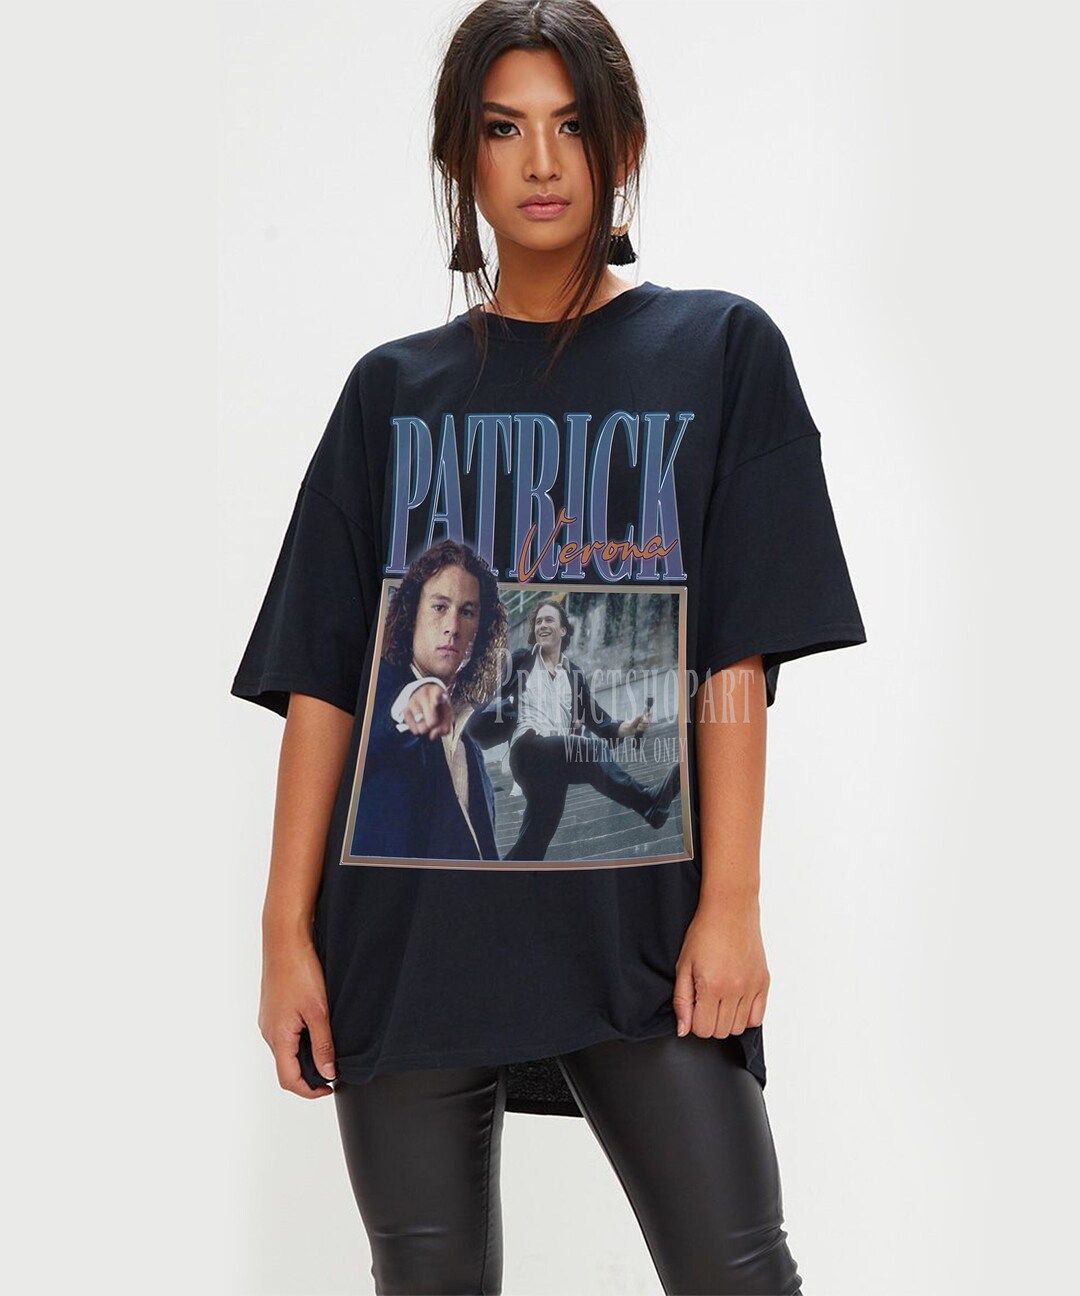 PATRICK VERONA Shirt, Heath Ledger 10 Things I Hate About You Homage T-shirt, Funny Patrick Veron... | Etsy (US)